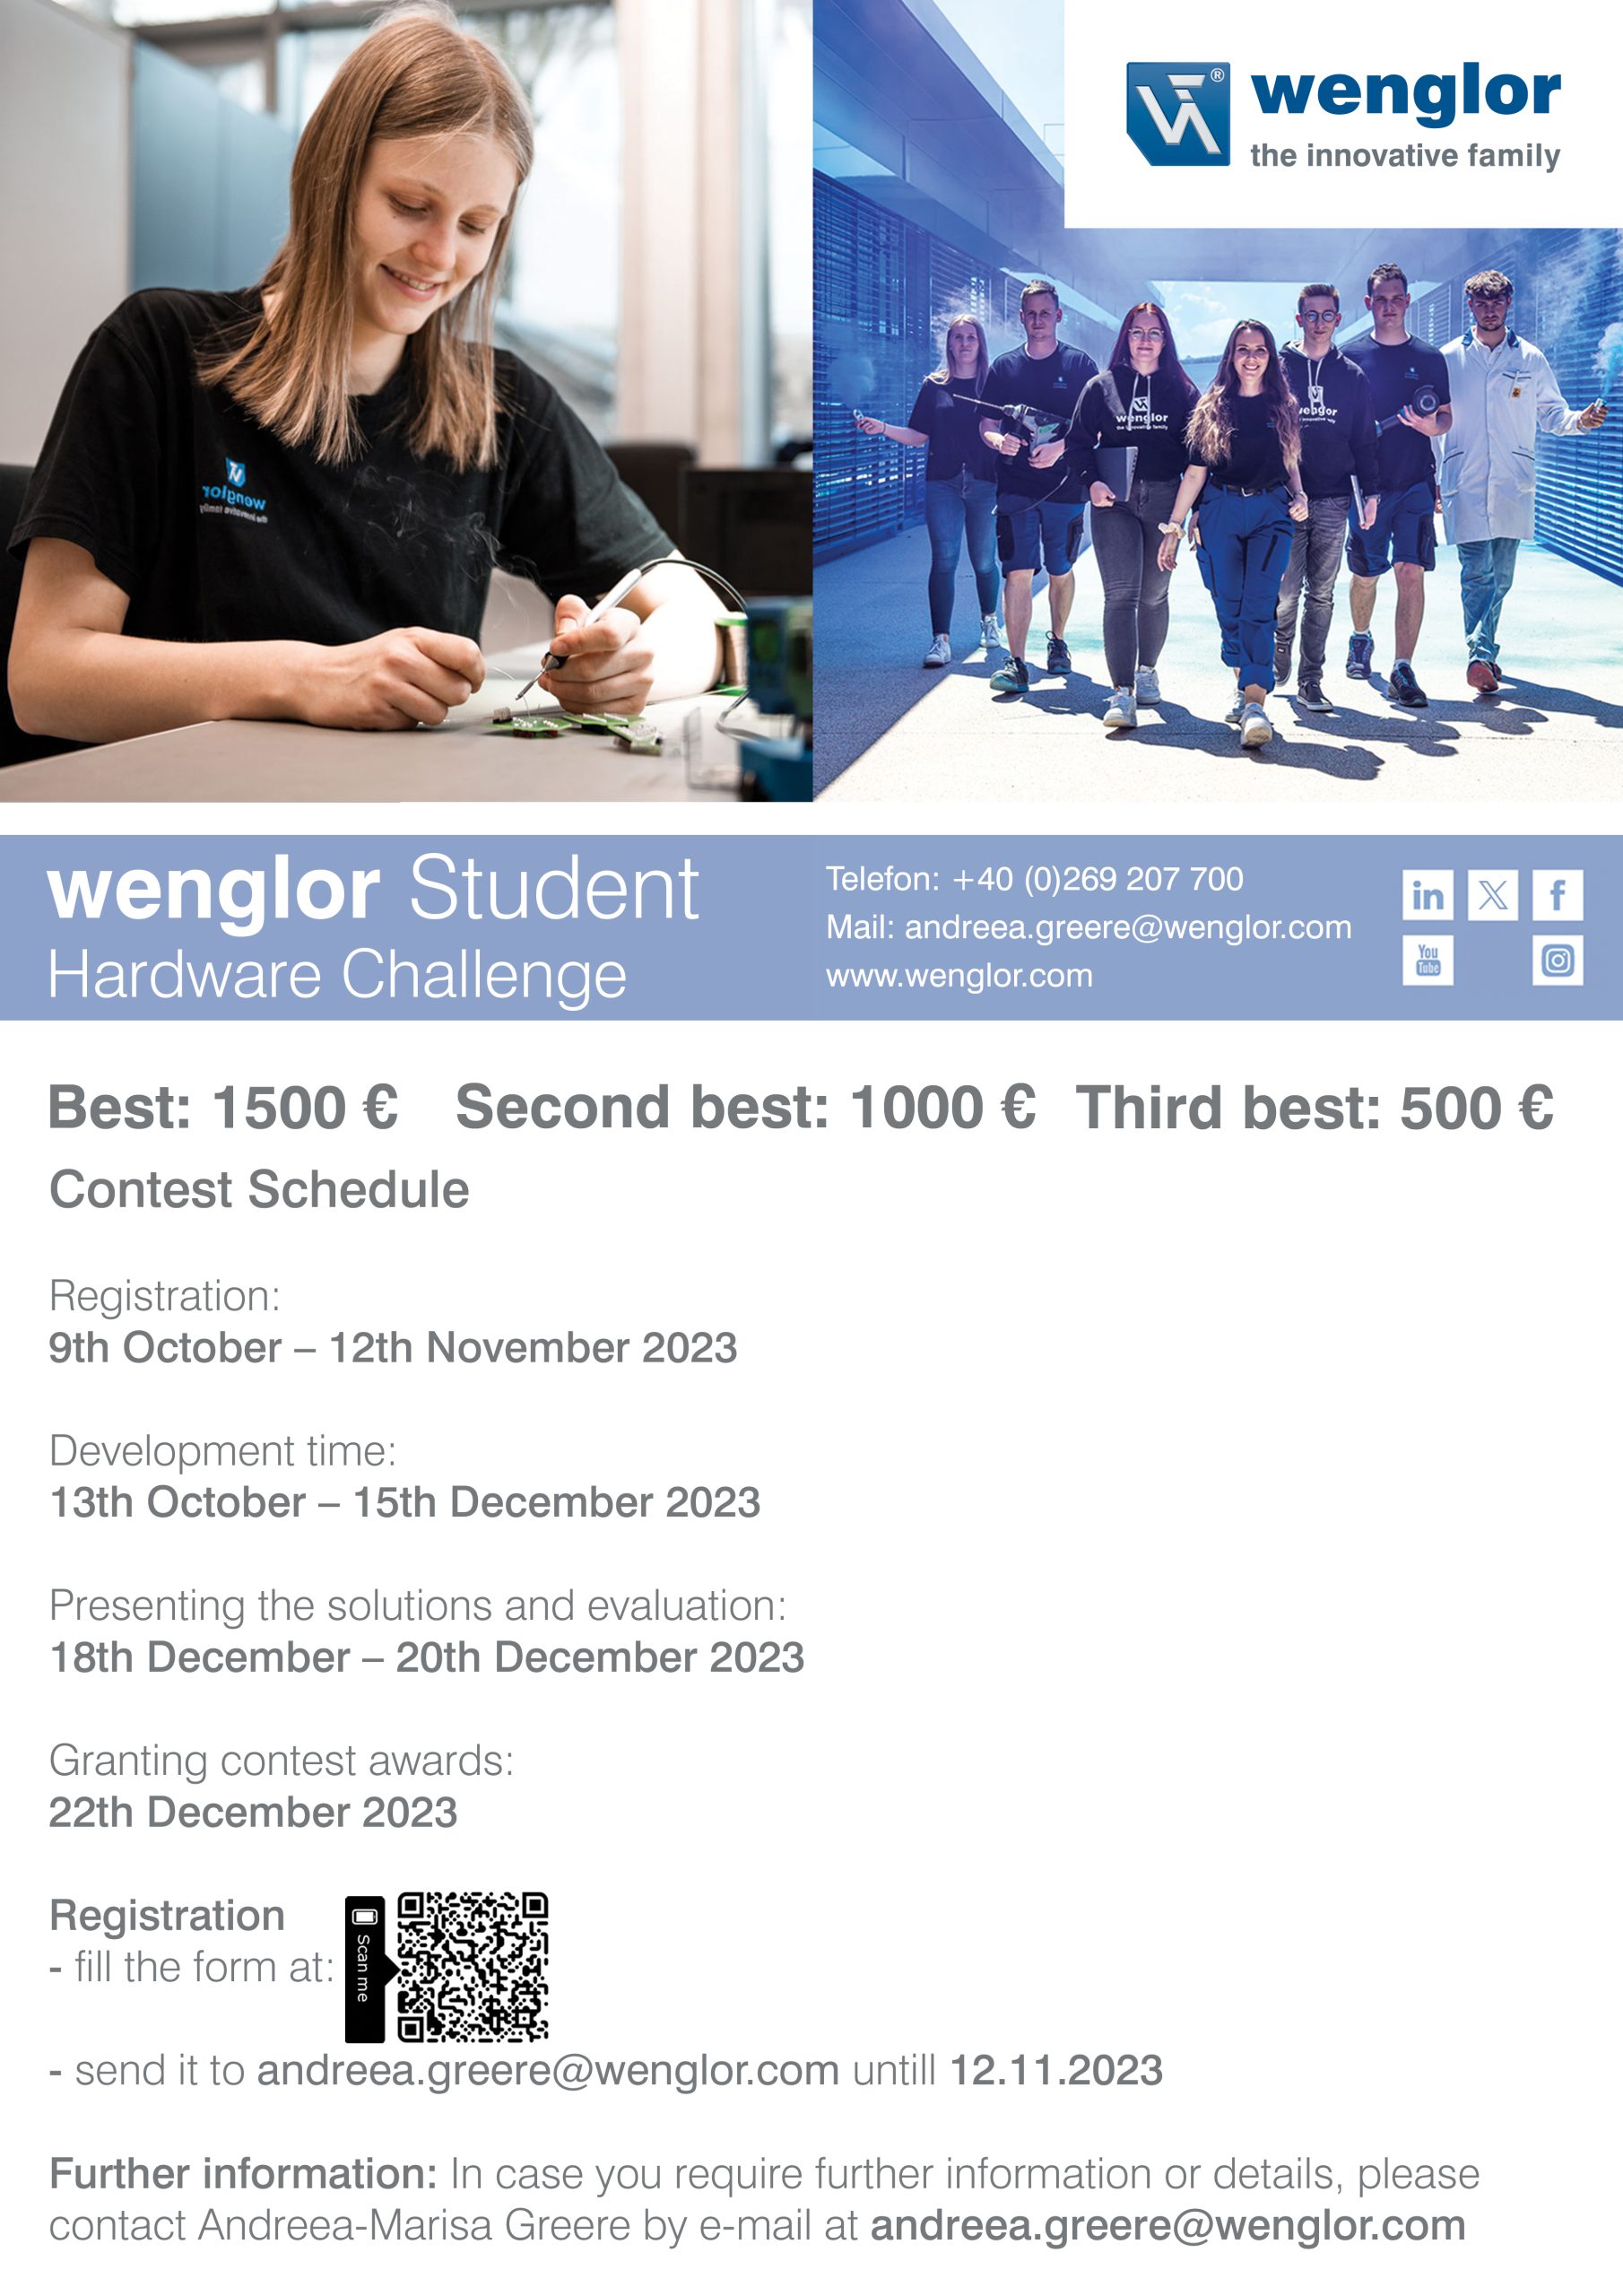 Wenglor Student Hardware Challenge